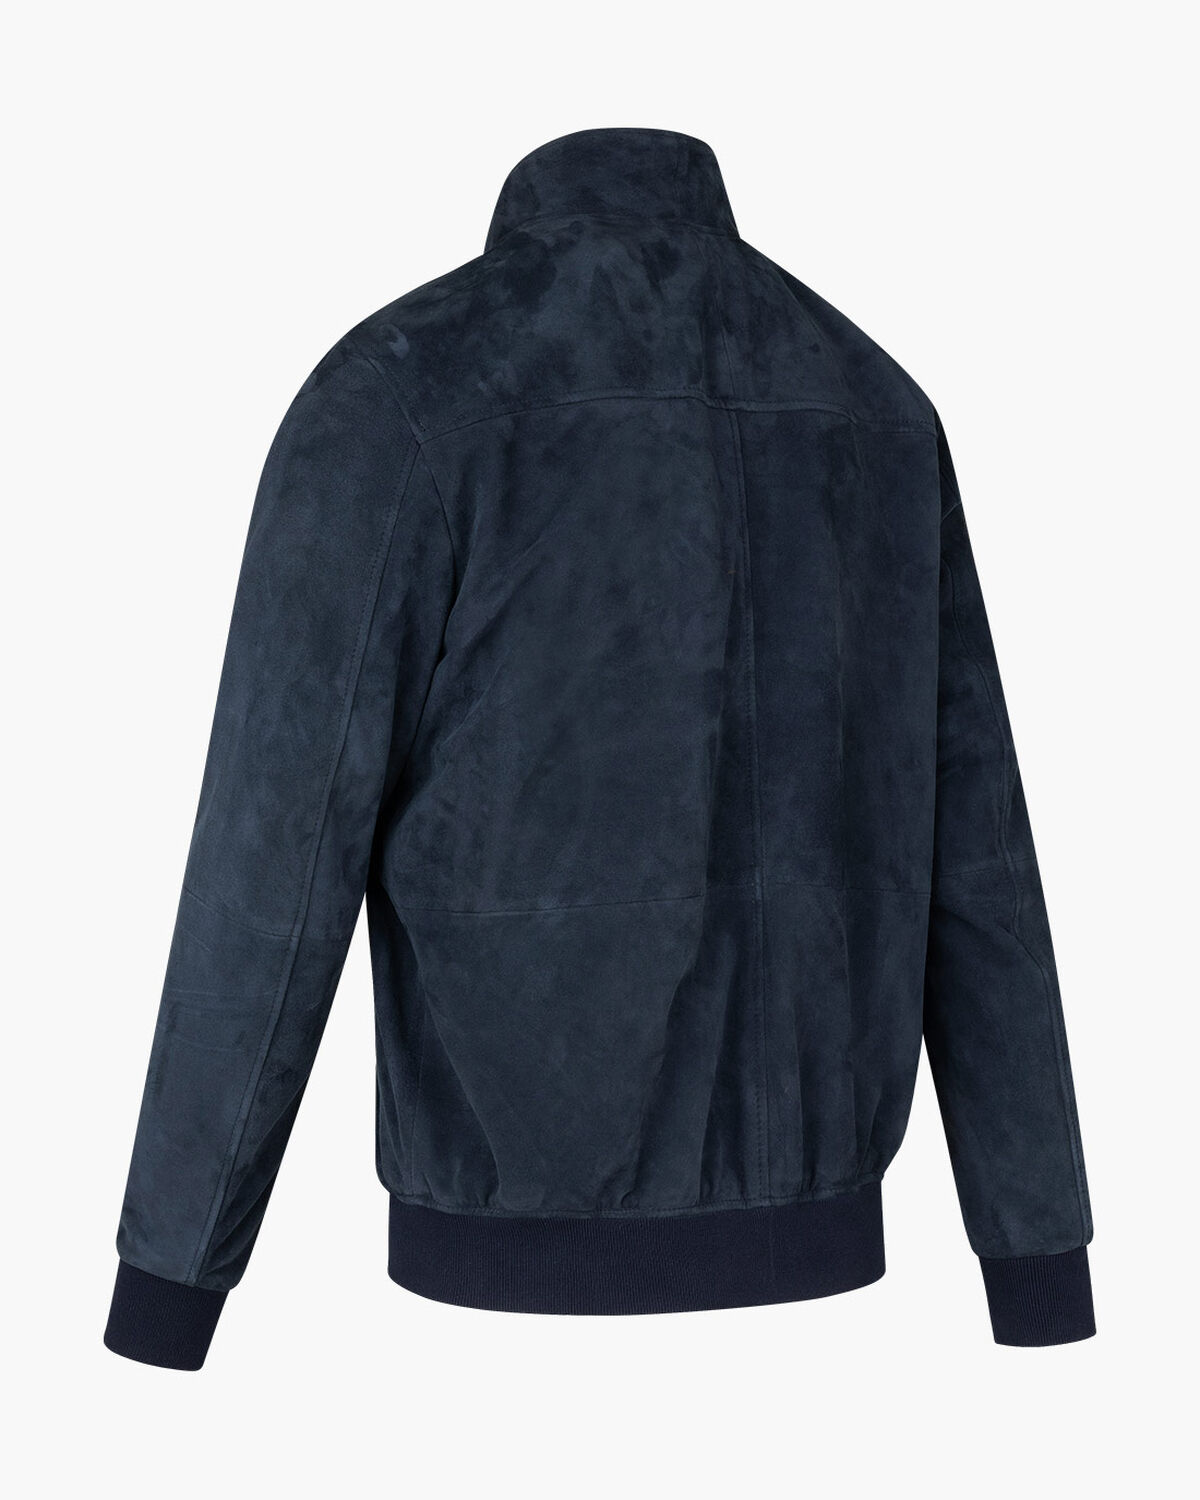 Dante Leather Harrington Jacket, Navy, hi-res